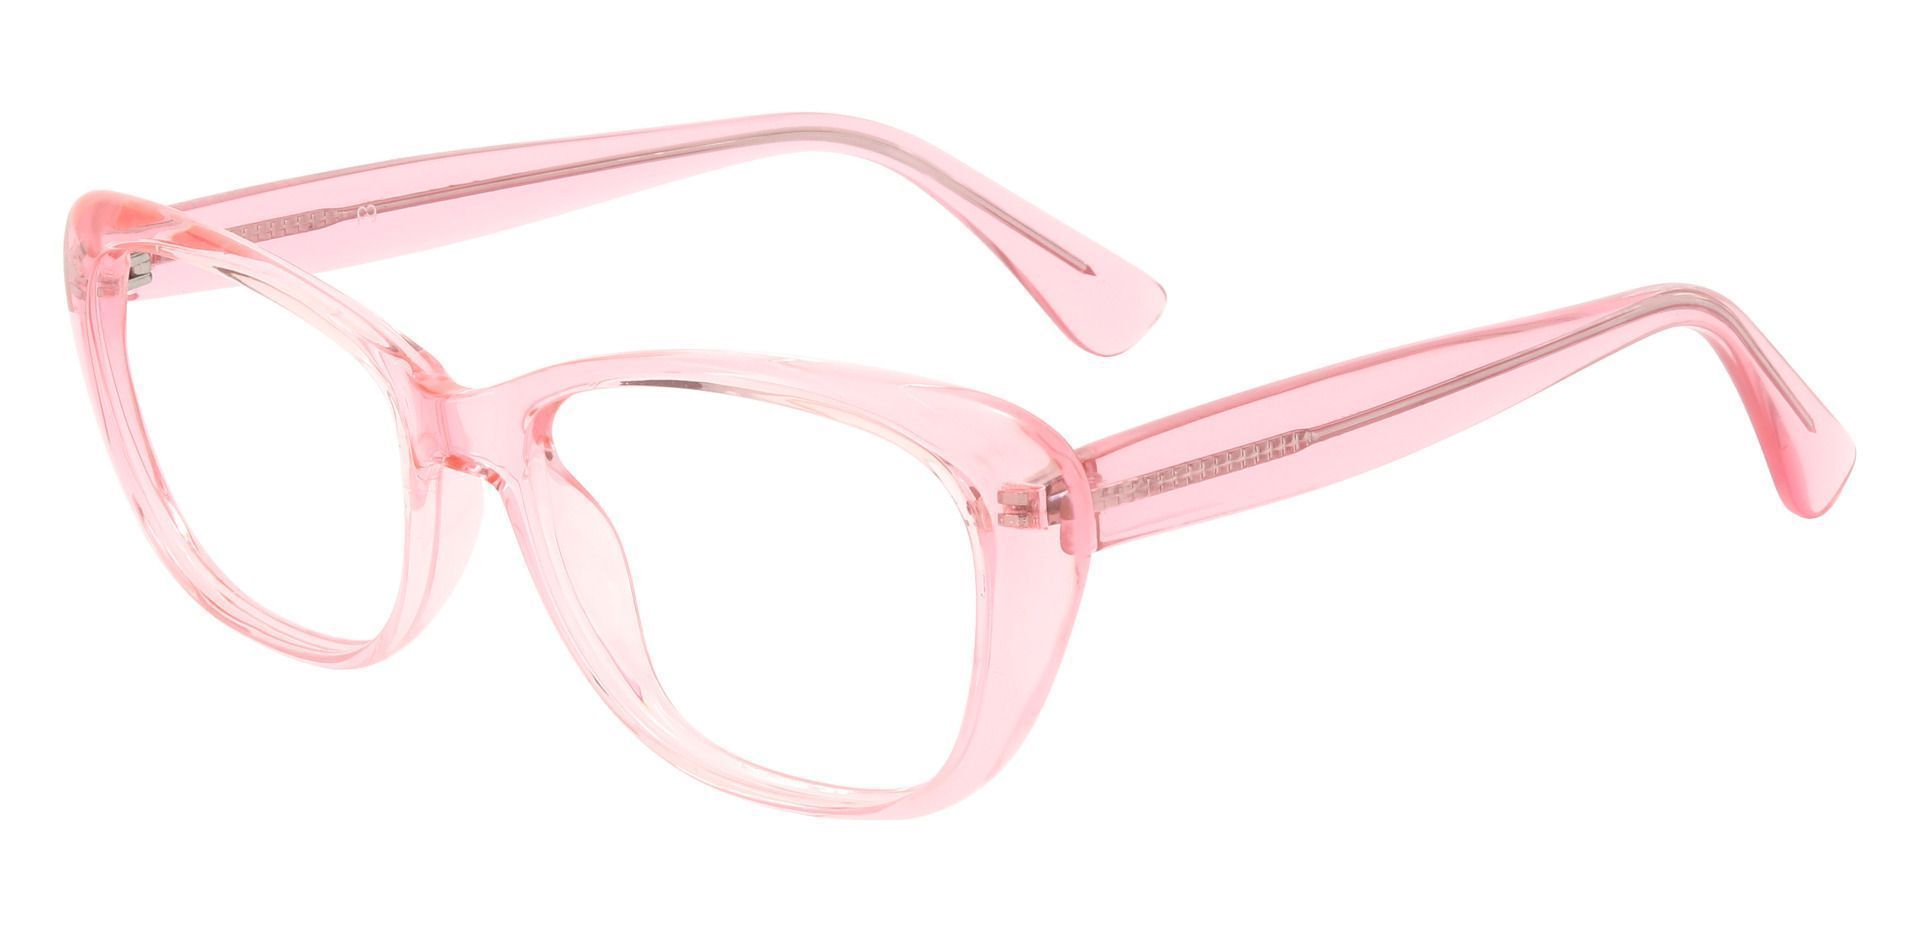 Electra Cat Eye Prescription Glasses - Pink